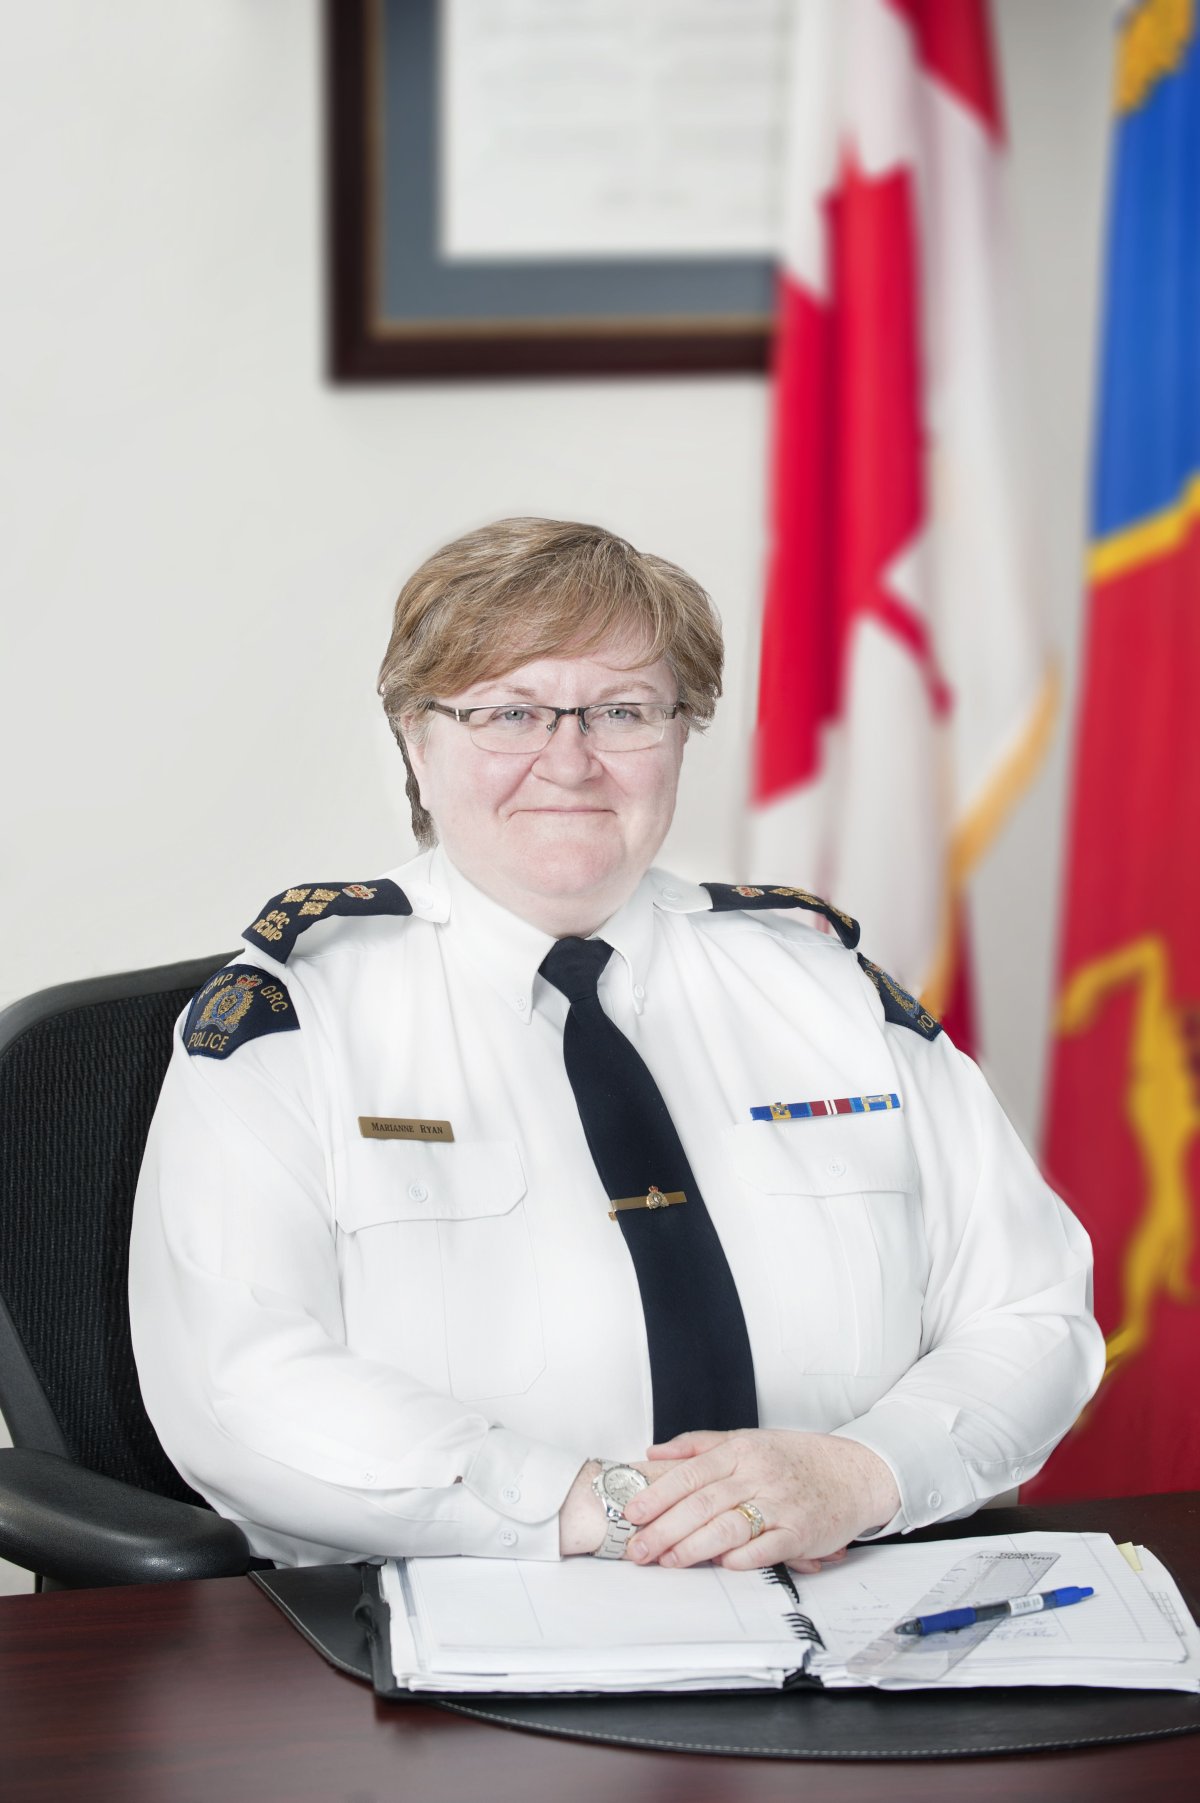 Meet the new Commanding Officer for “K” Division RCMP: Marianne Ryan.